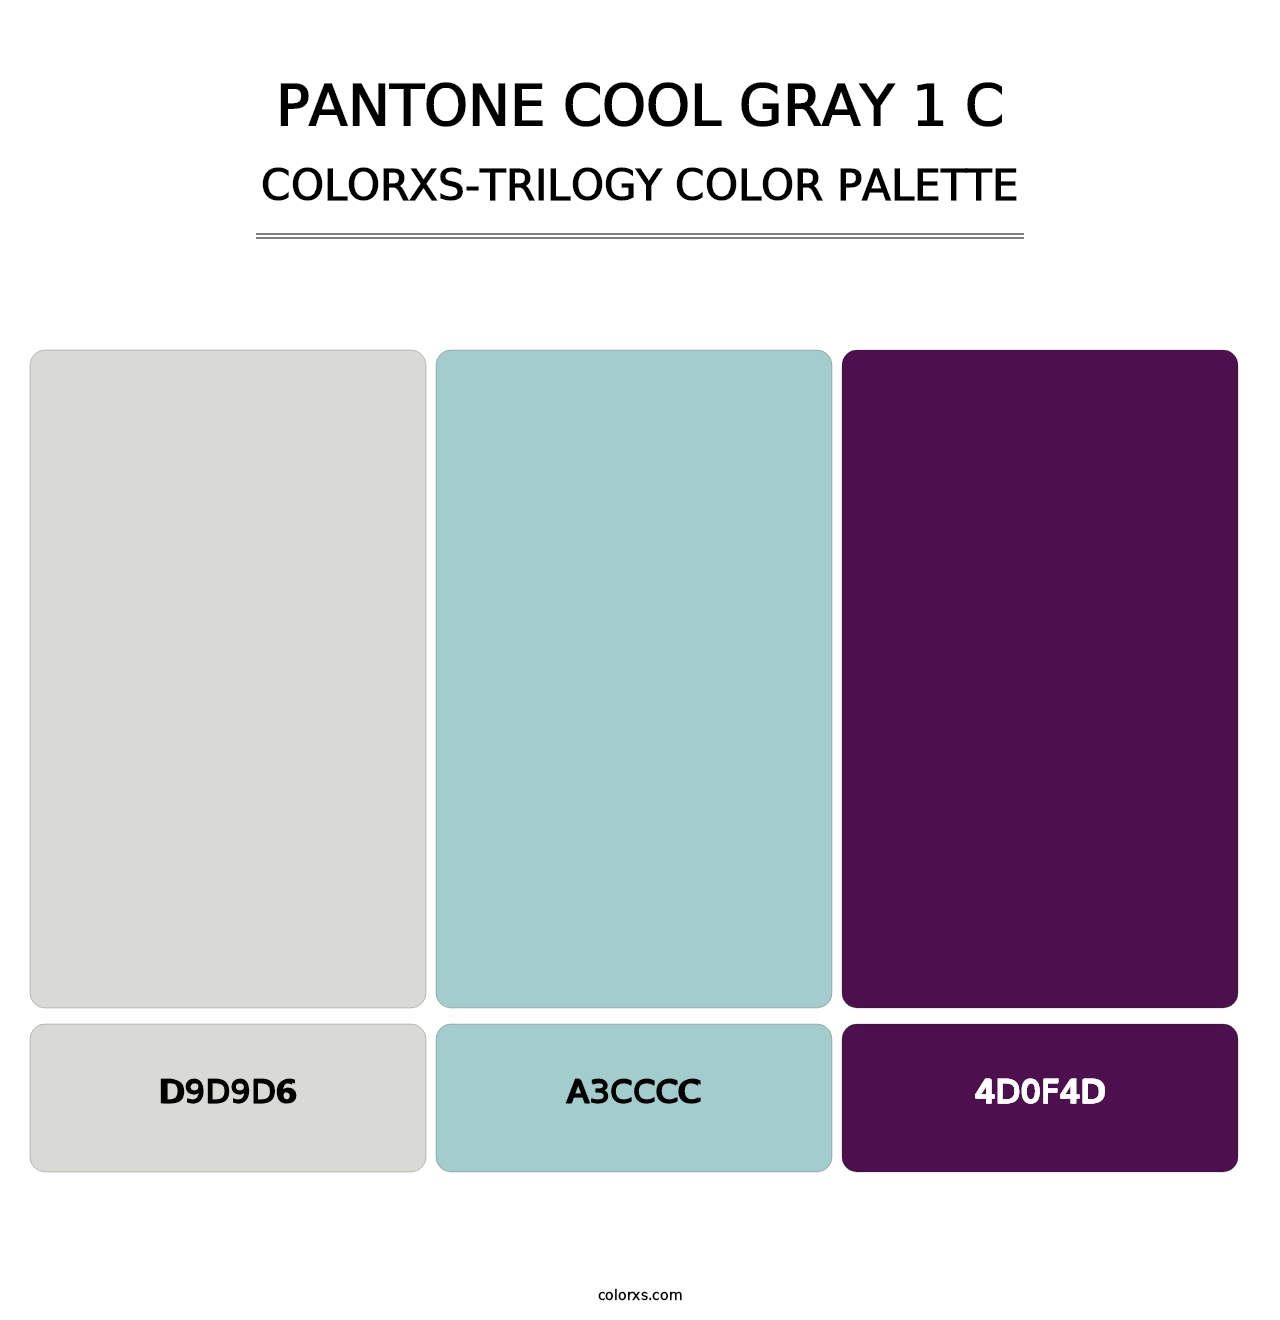 PANTONE Cool Gray 1 C - Colorxs Trilogy Palette